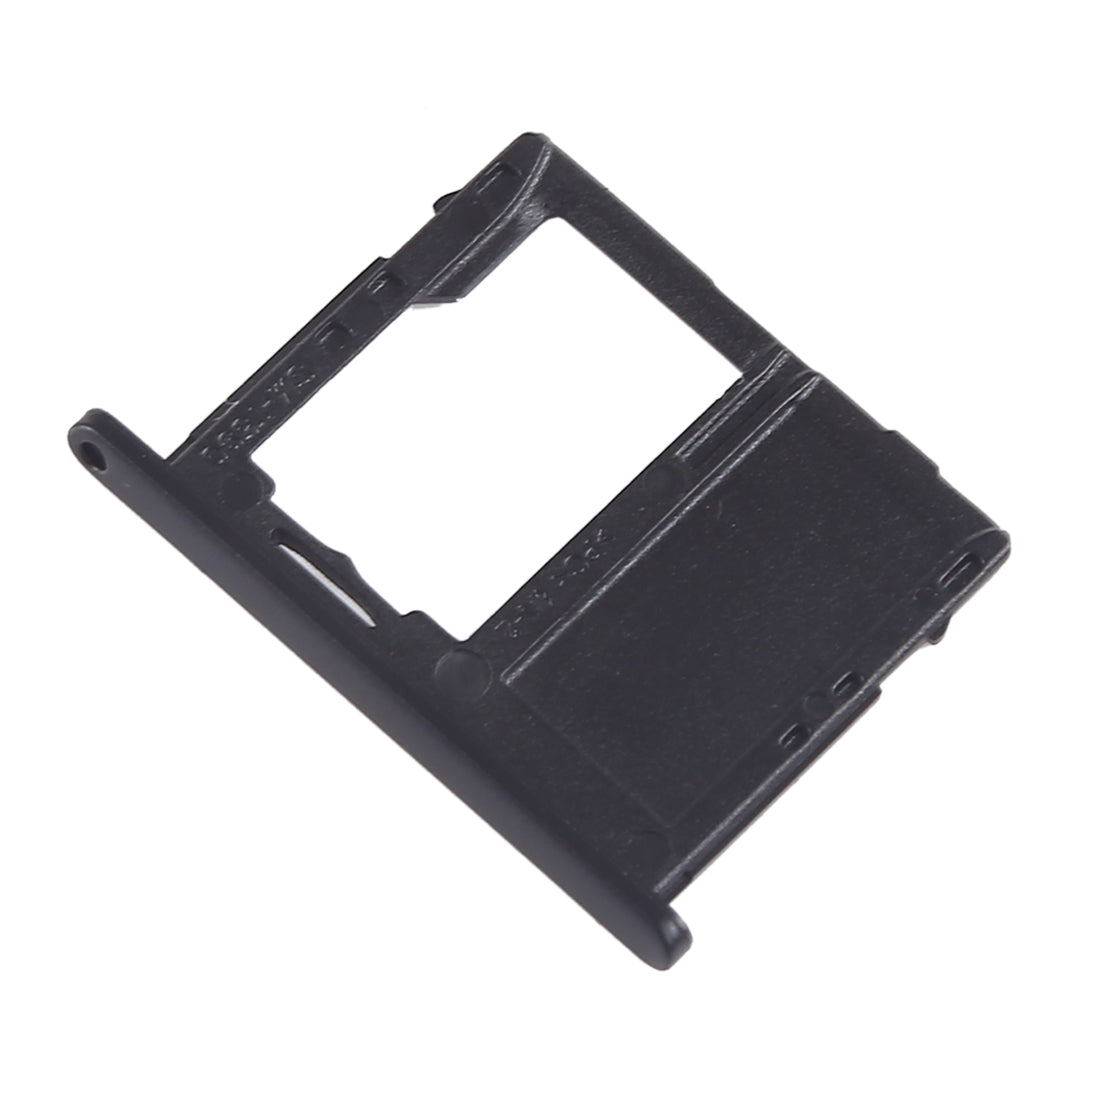 Support Plateau Micro SD Samsung Galaxy Tab A 10.5 T590 WIFI Noir